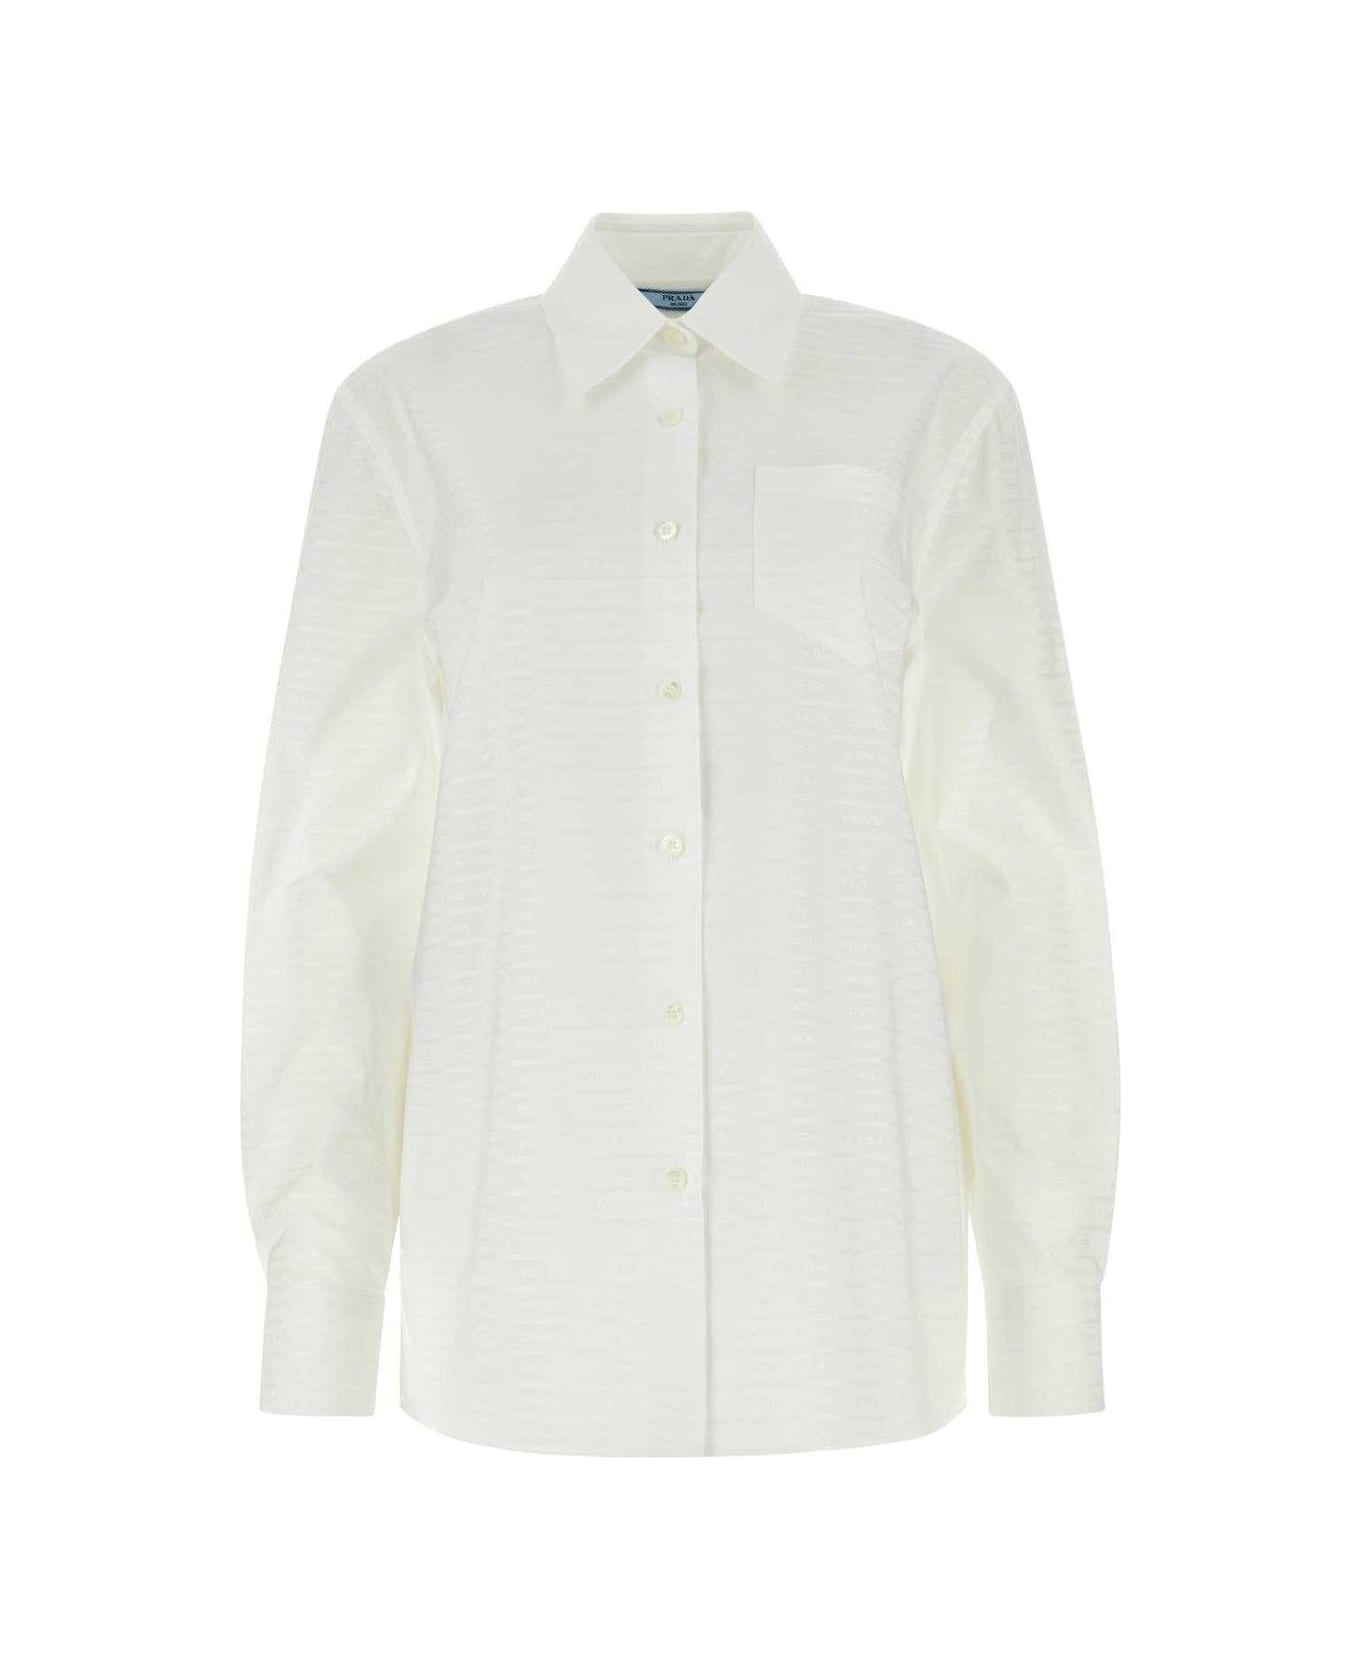 Prada Collared Button-up Shirt - White